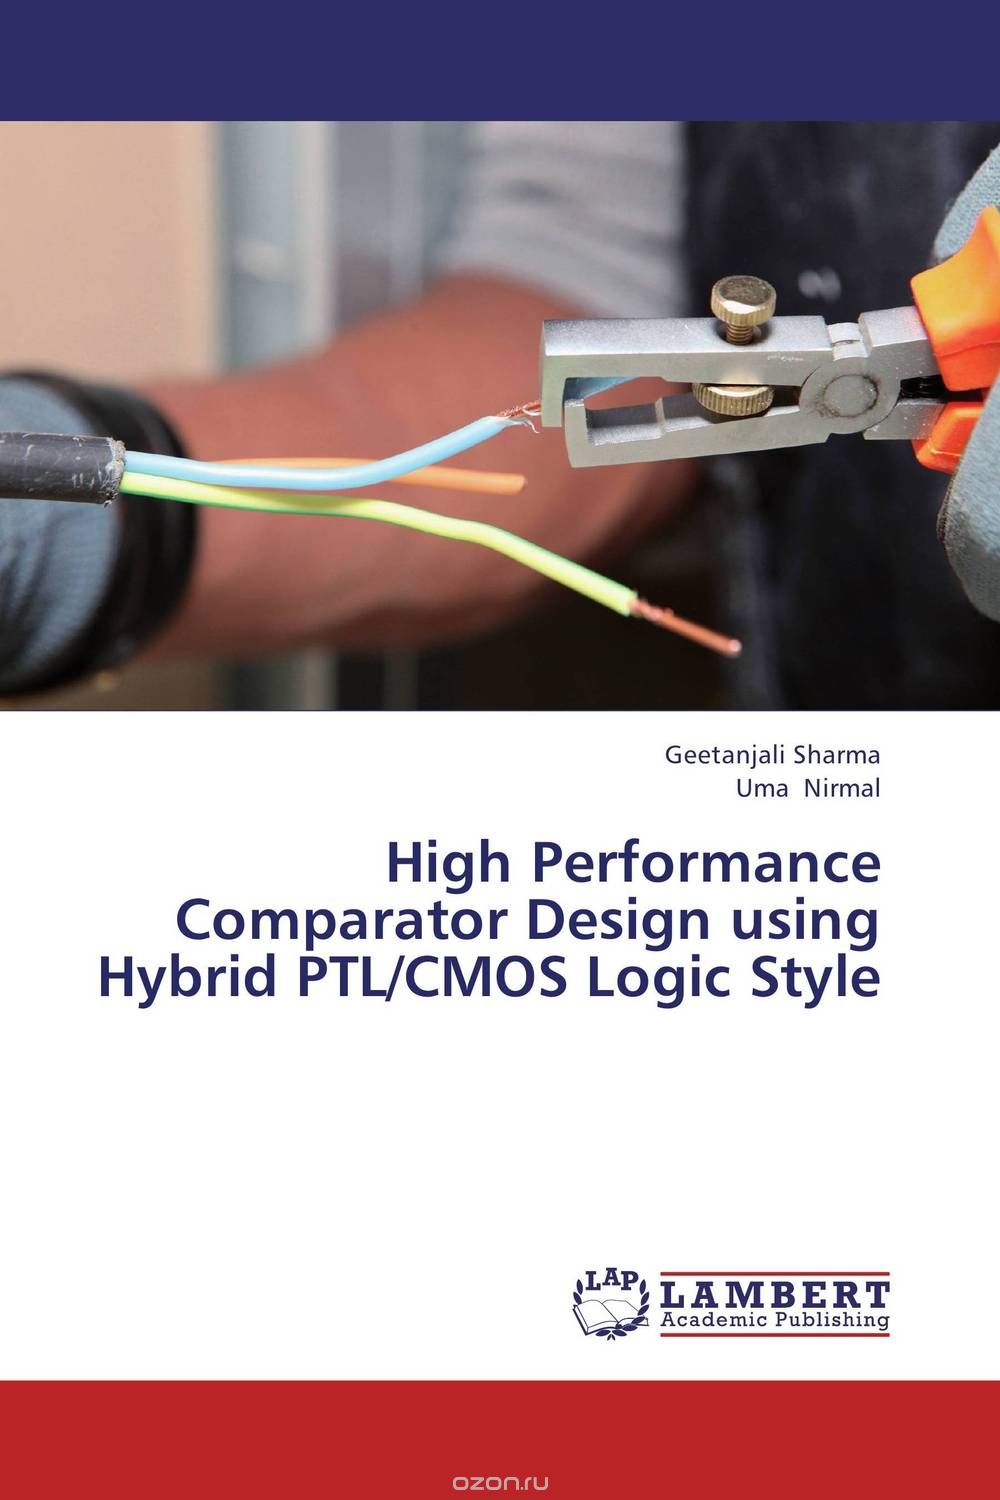 Скачать книгу "High Performance Comparator Design using Hybrid PTL/CMOS Logic Style"